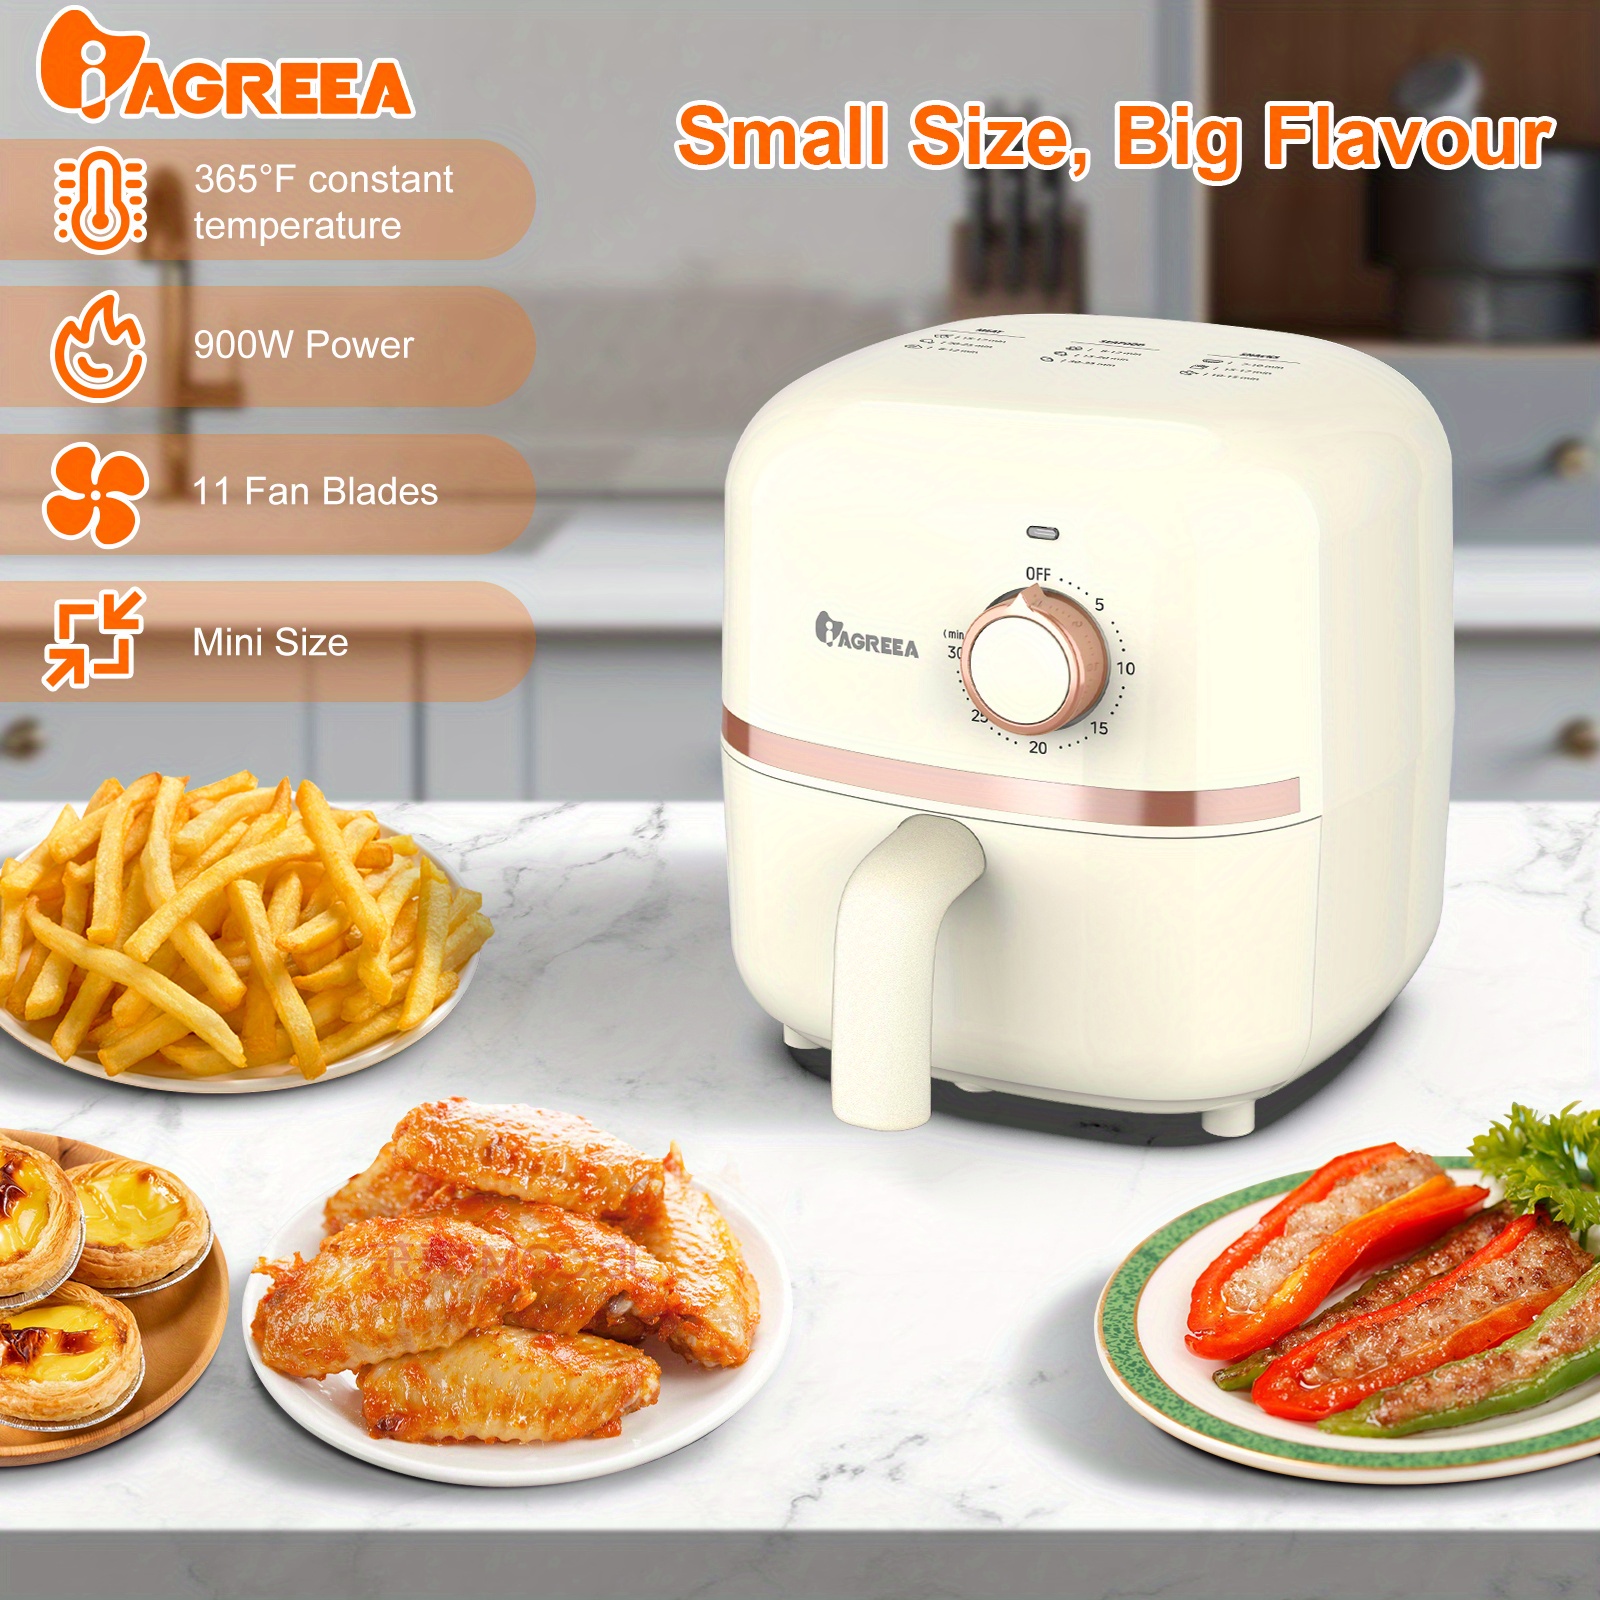 Iagreea /2.1qt Mini Electric Air Fryer, Oven Cooker, Non-stick Fry